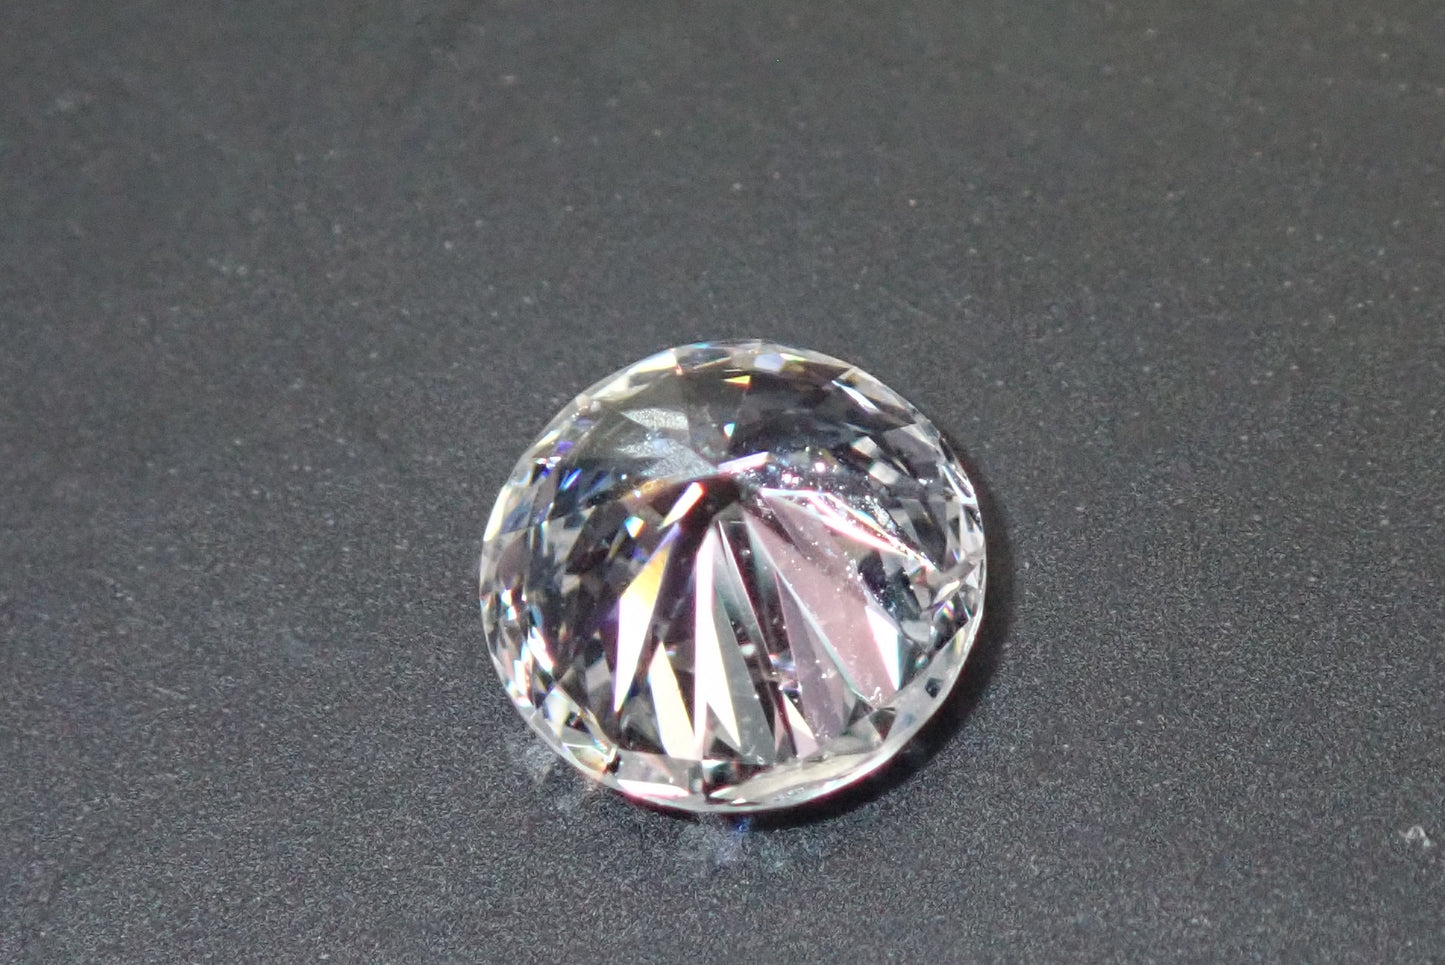 Natural diamond 0.388ct